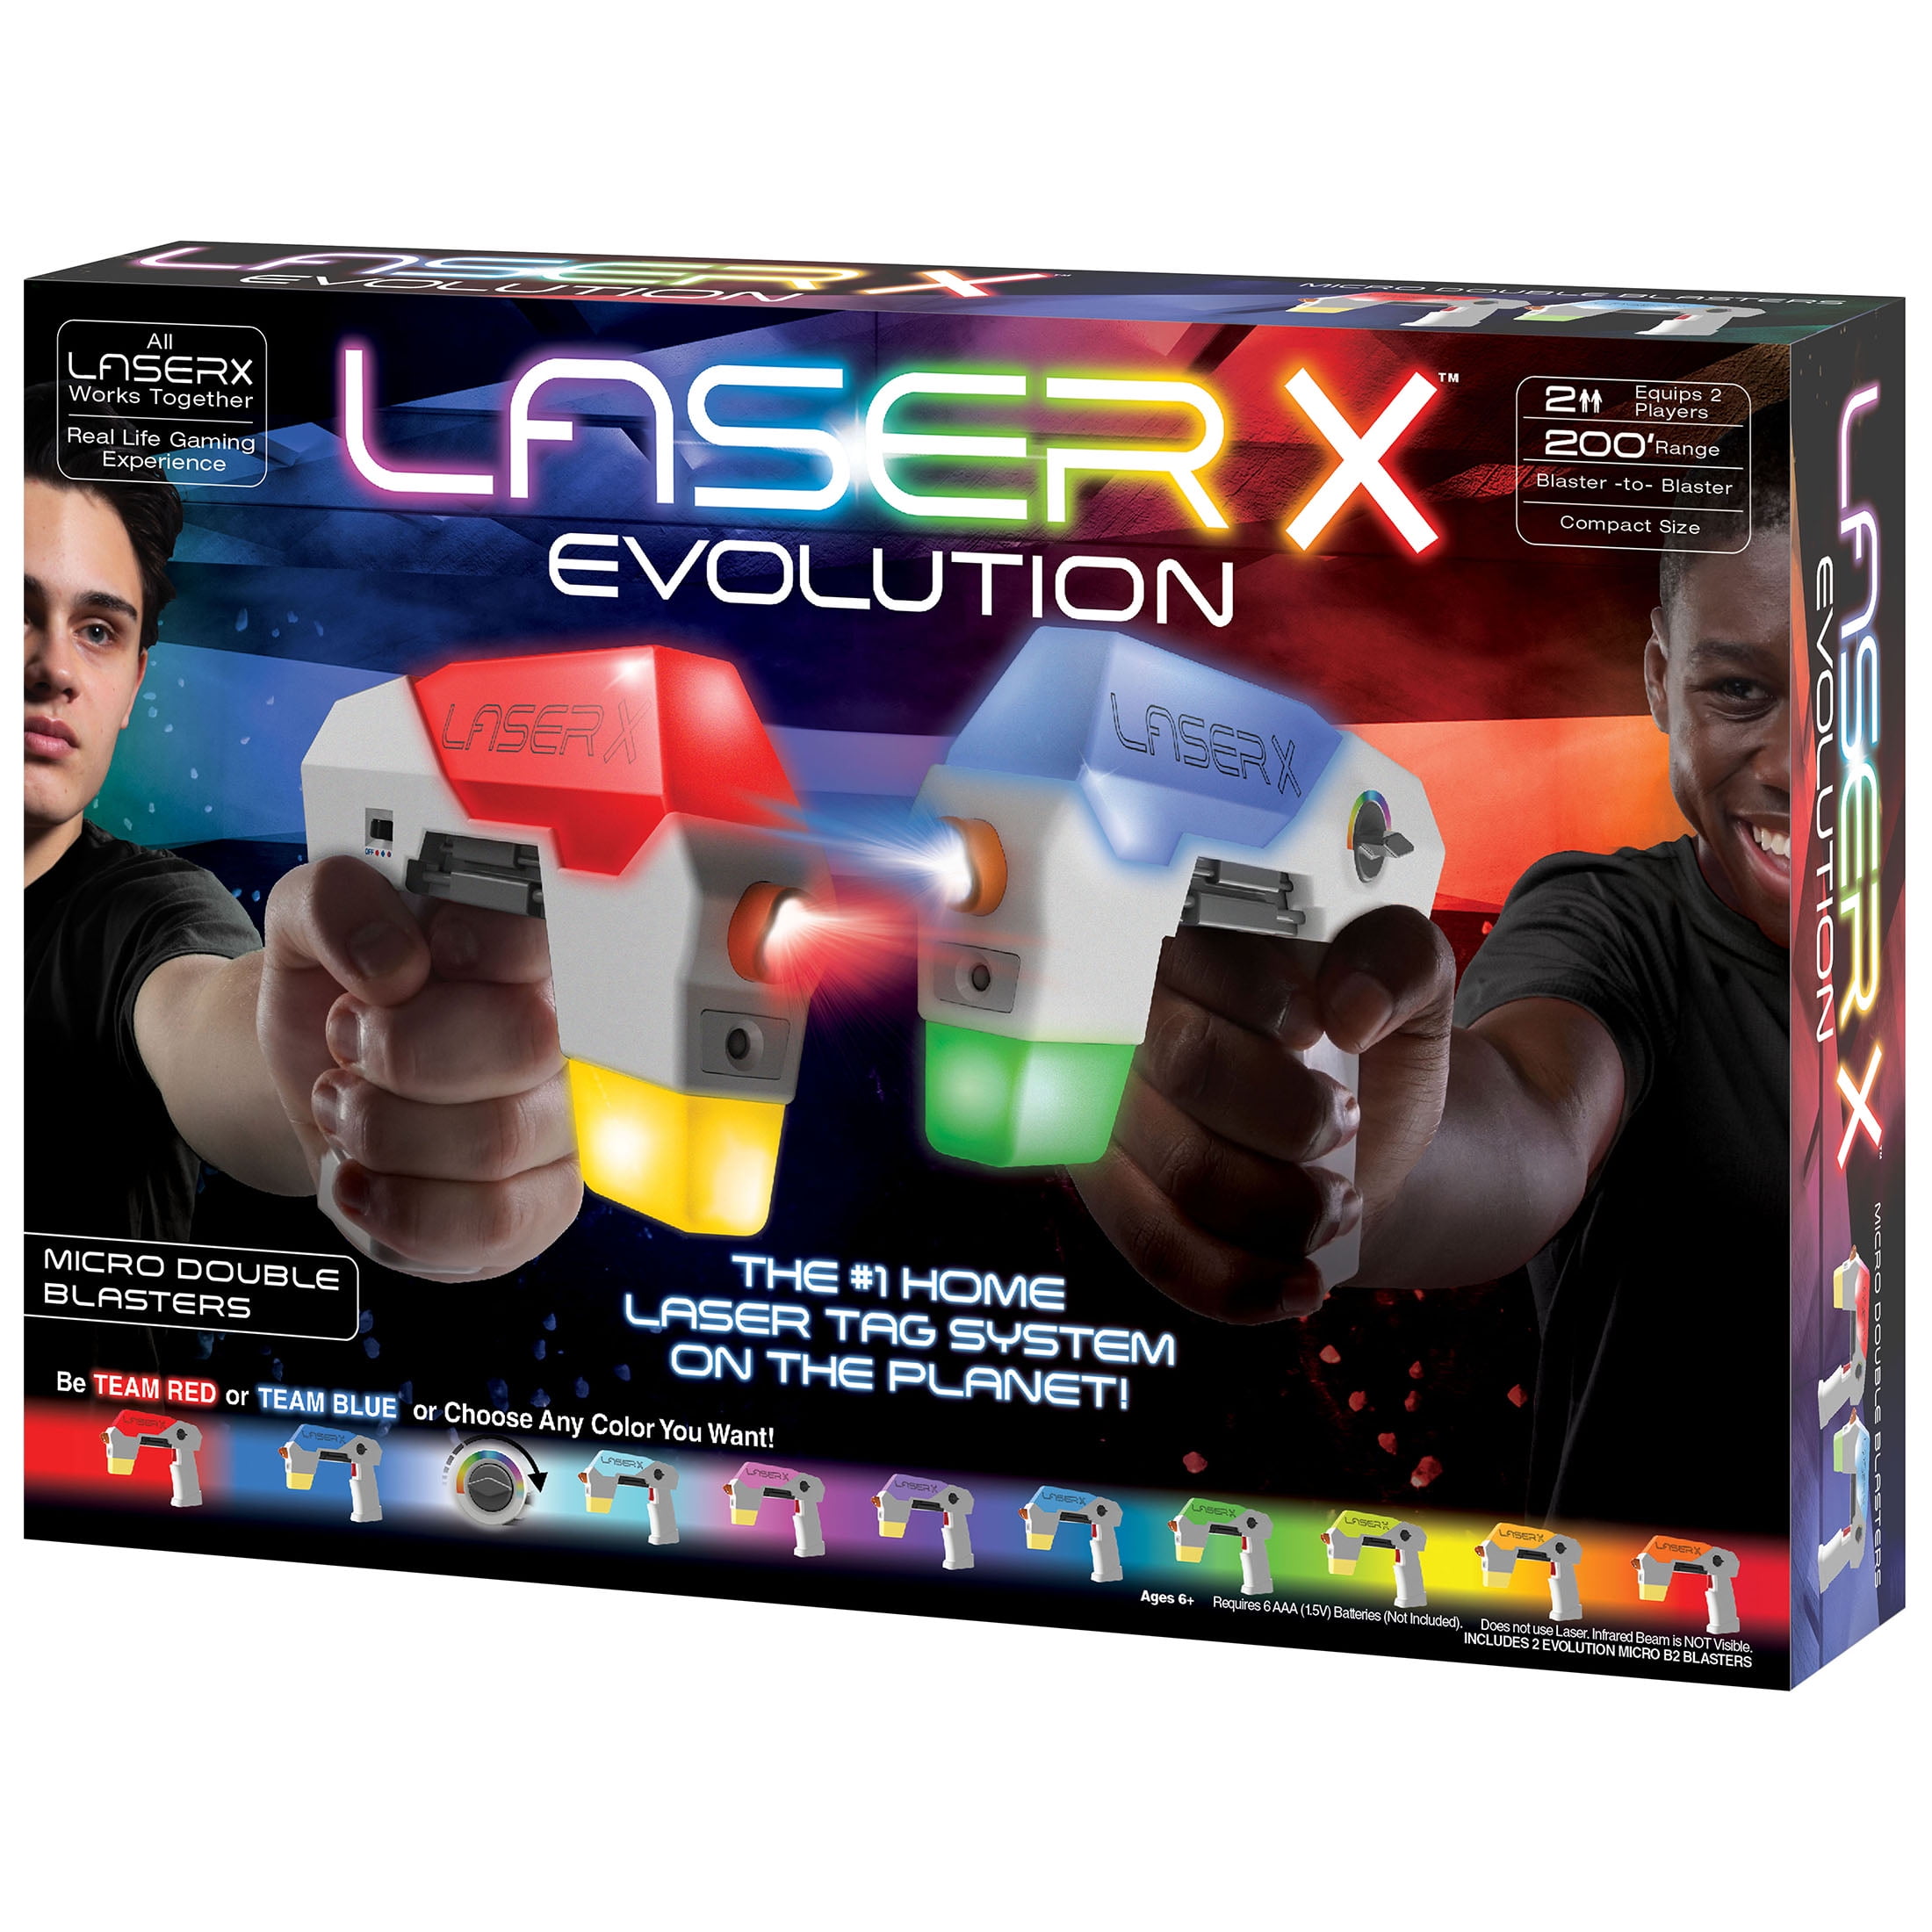 Promo Lansay laser x double blaster évolution chez JouéClub